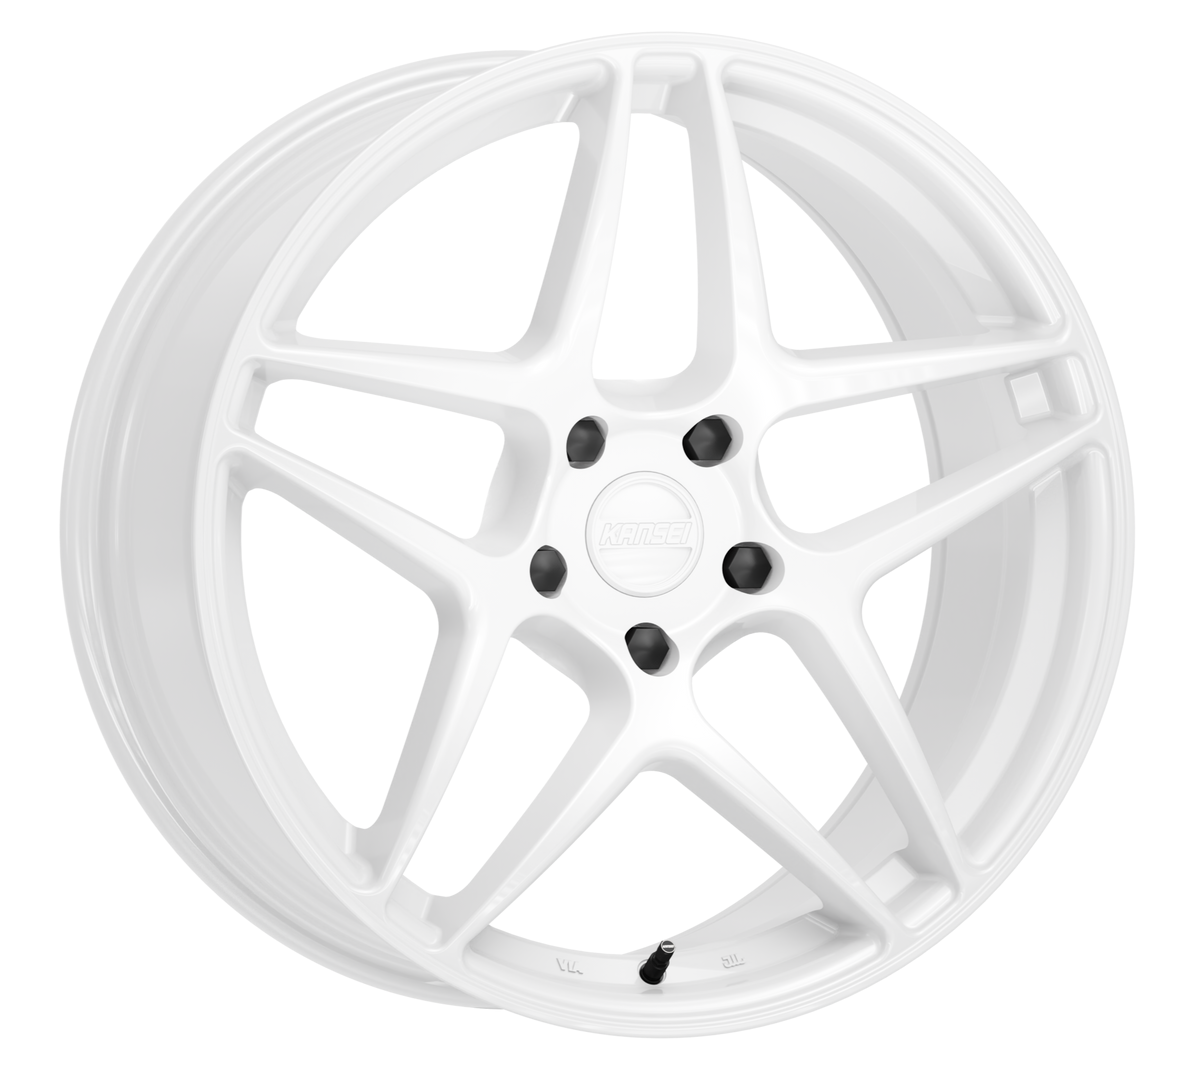 K15W ASTRO Wheel, Size: 19" x 9.50", Bolt Pattern: 5 x 114.300 mm, Backspace: 6.63" [Finish: Gloss White]